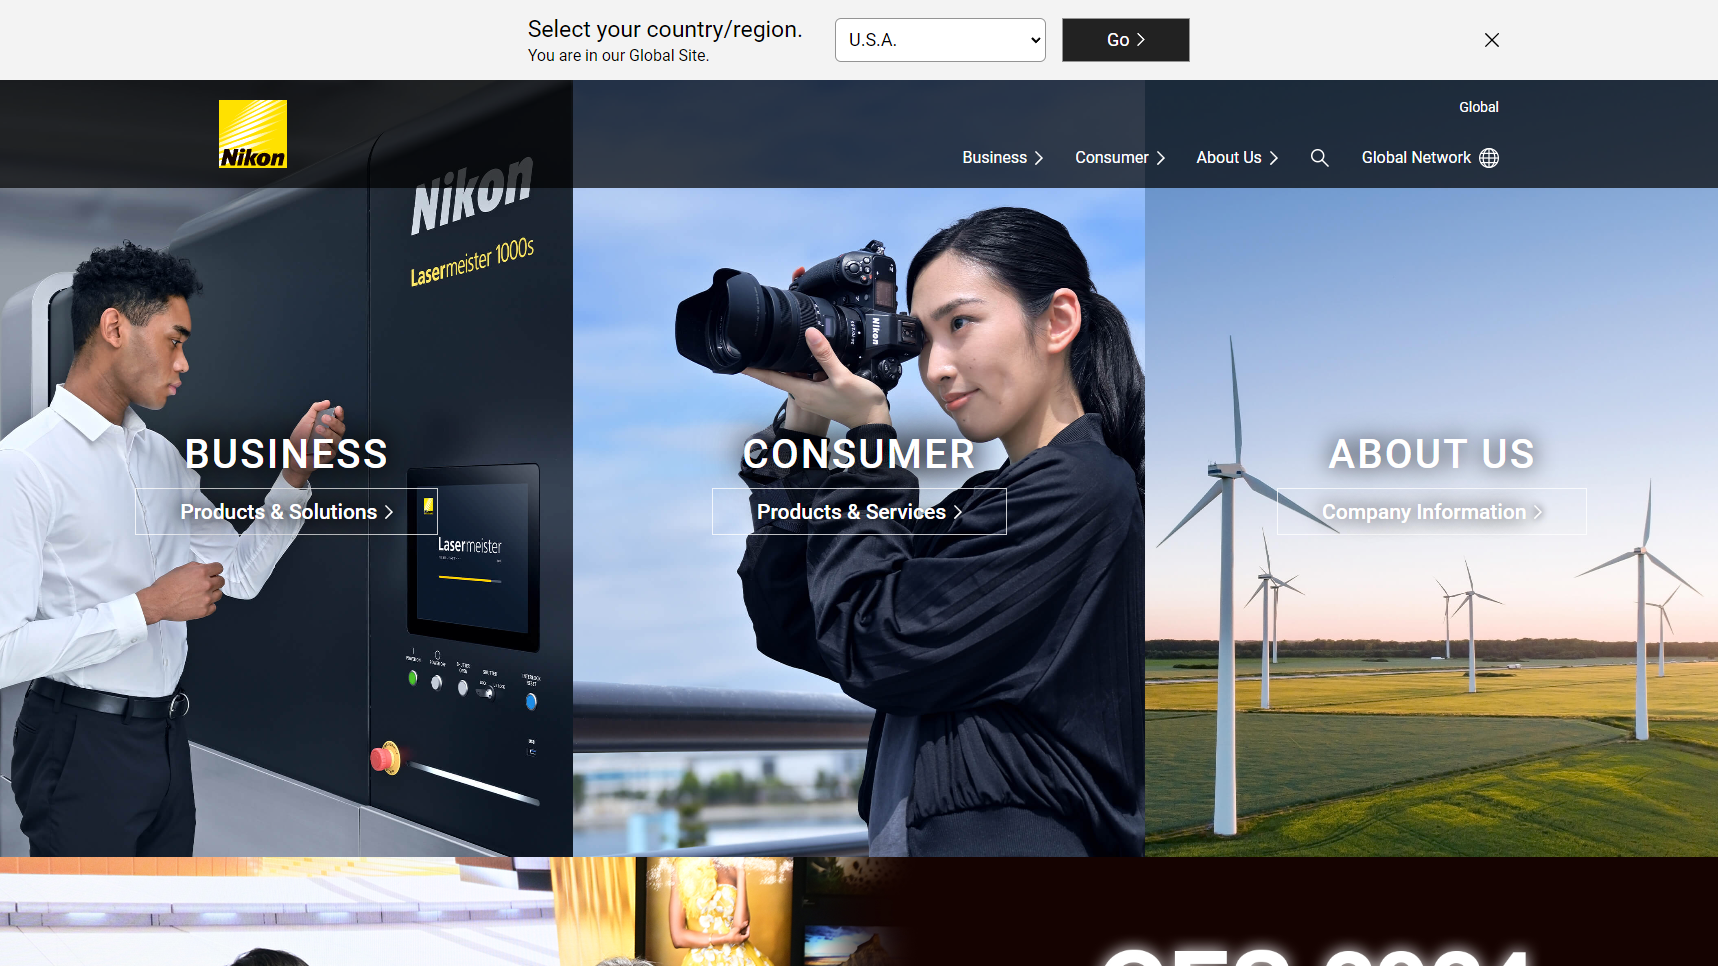 Nikon Corporation - Lens Manufacturer